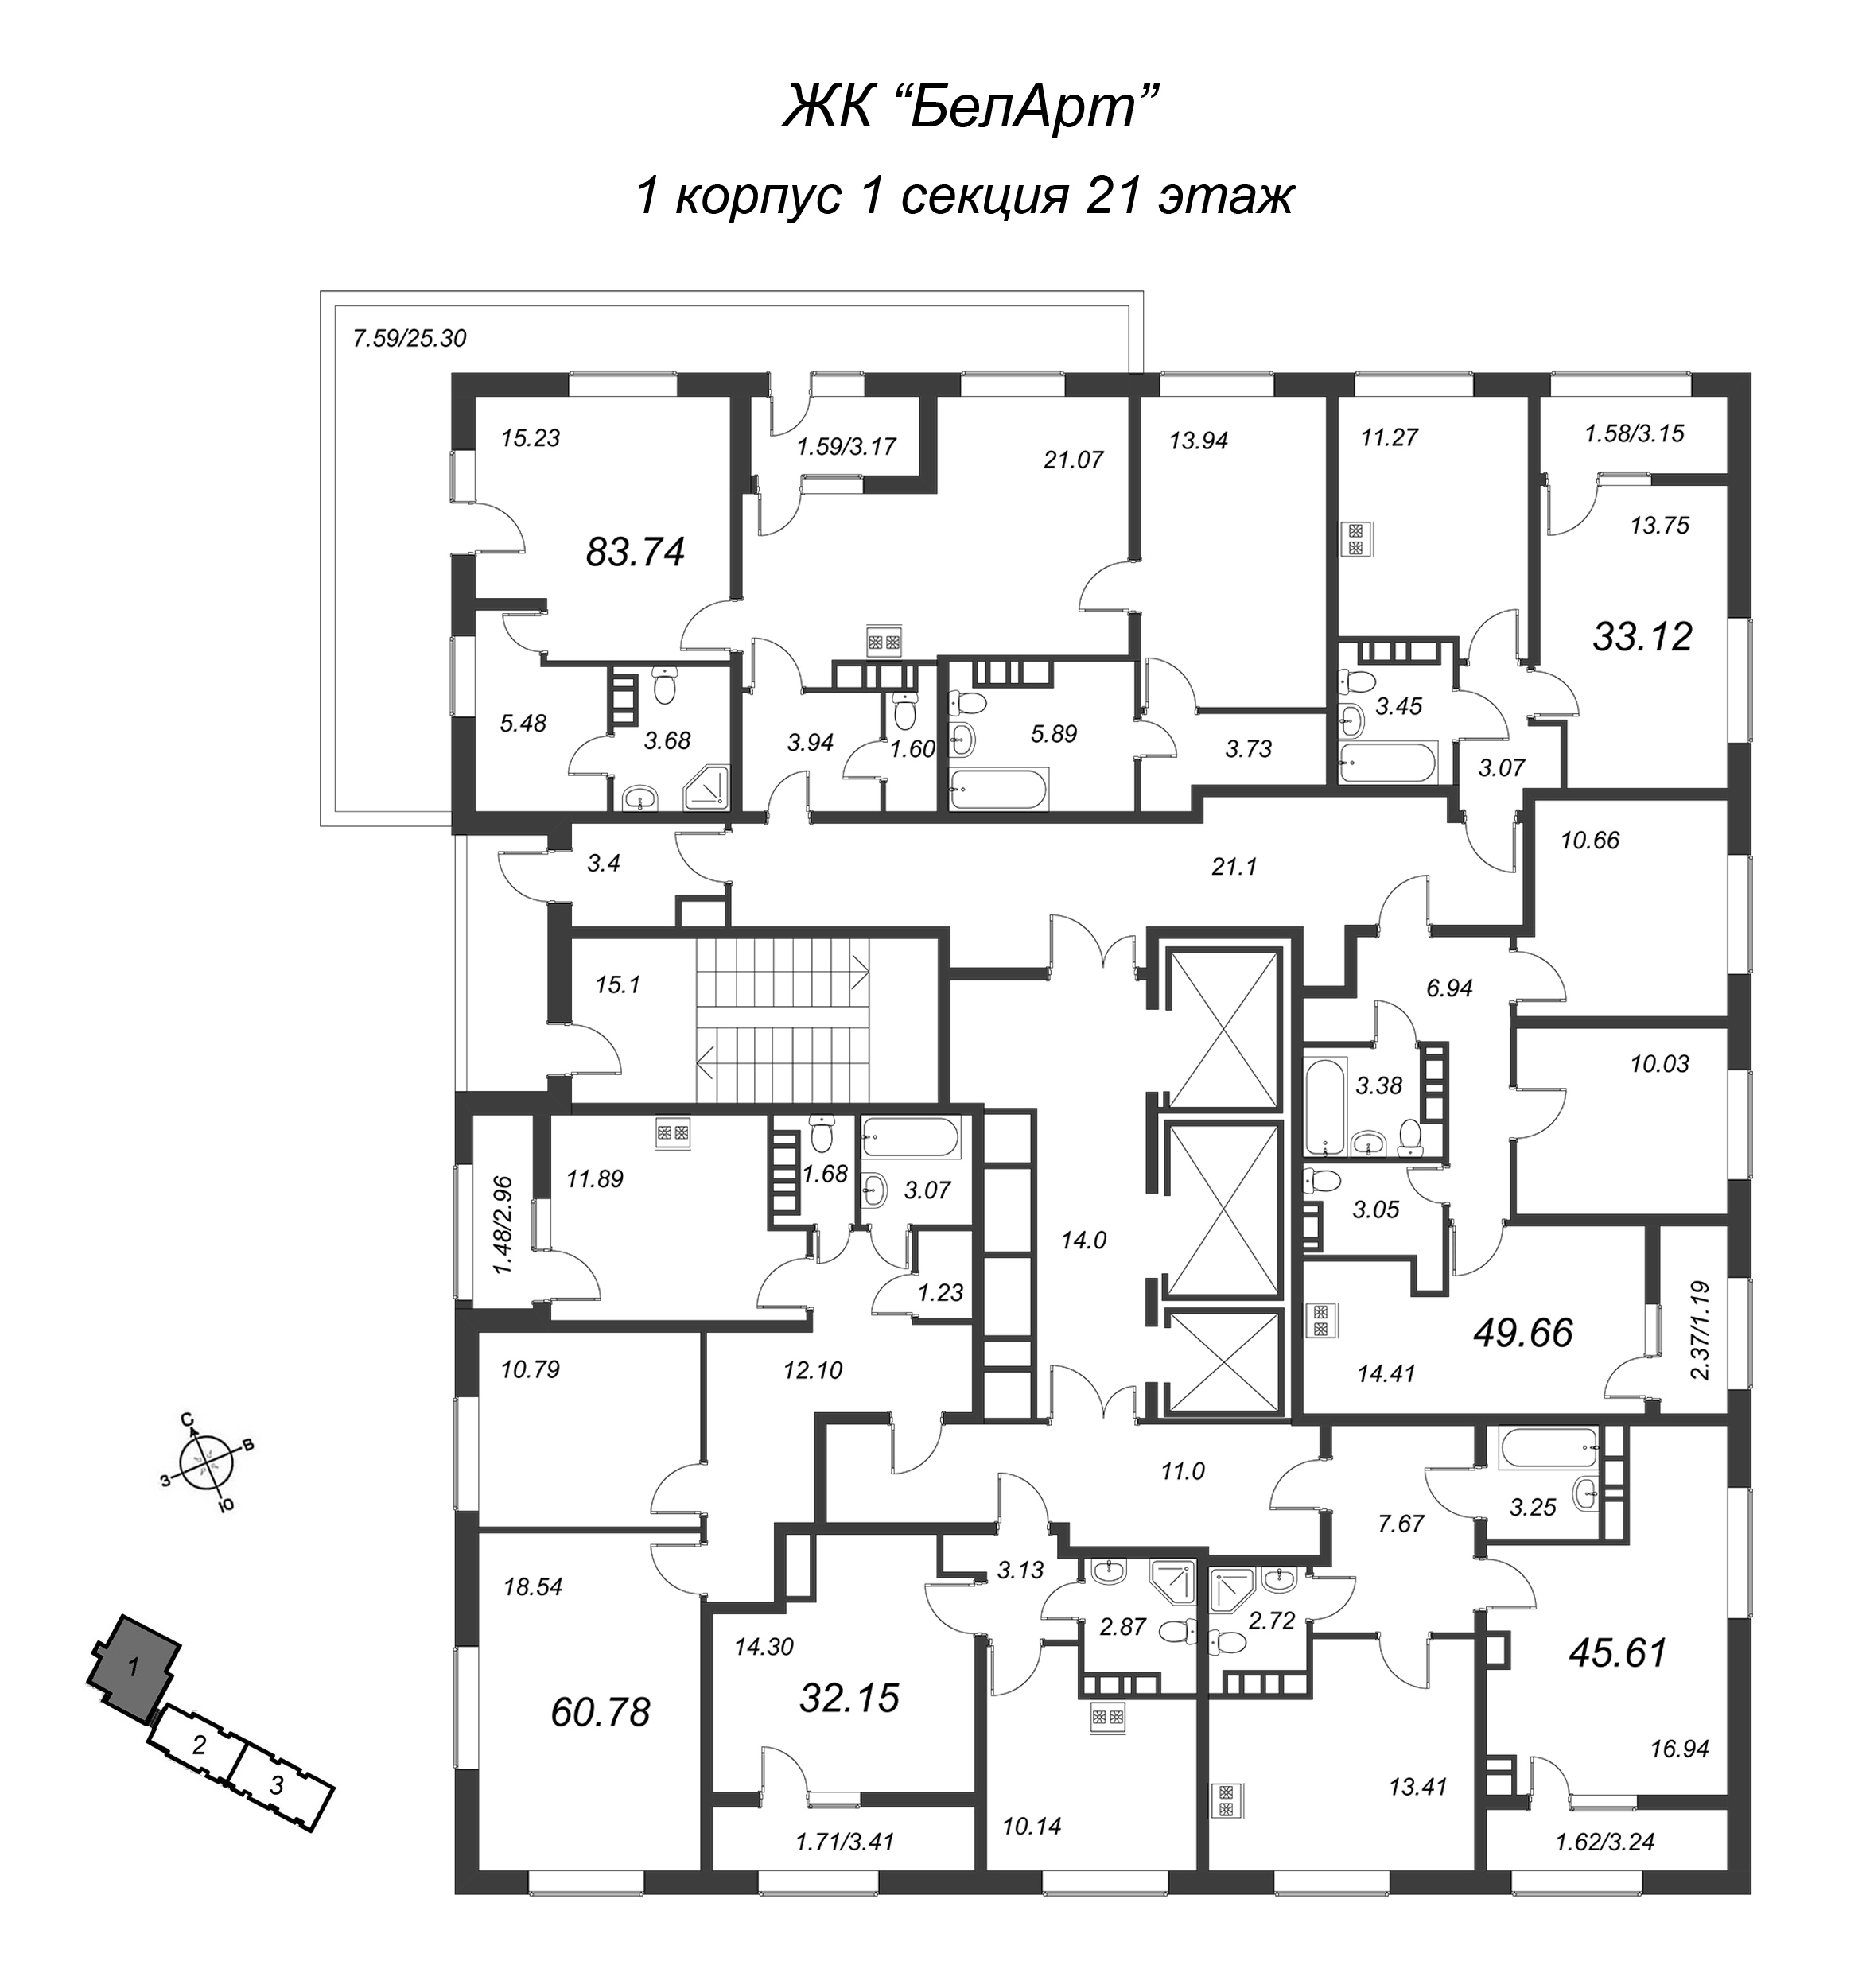 3-комнатная (Евро) квартира, 83.1 м² в ЖК "БелАрт" - планировка этажа